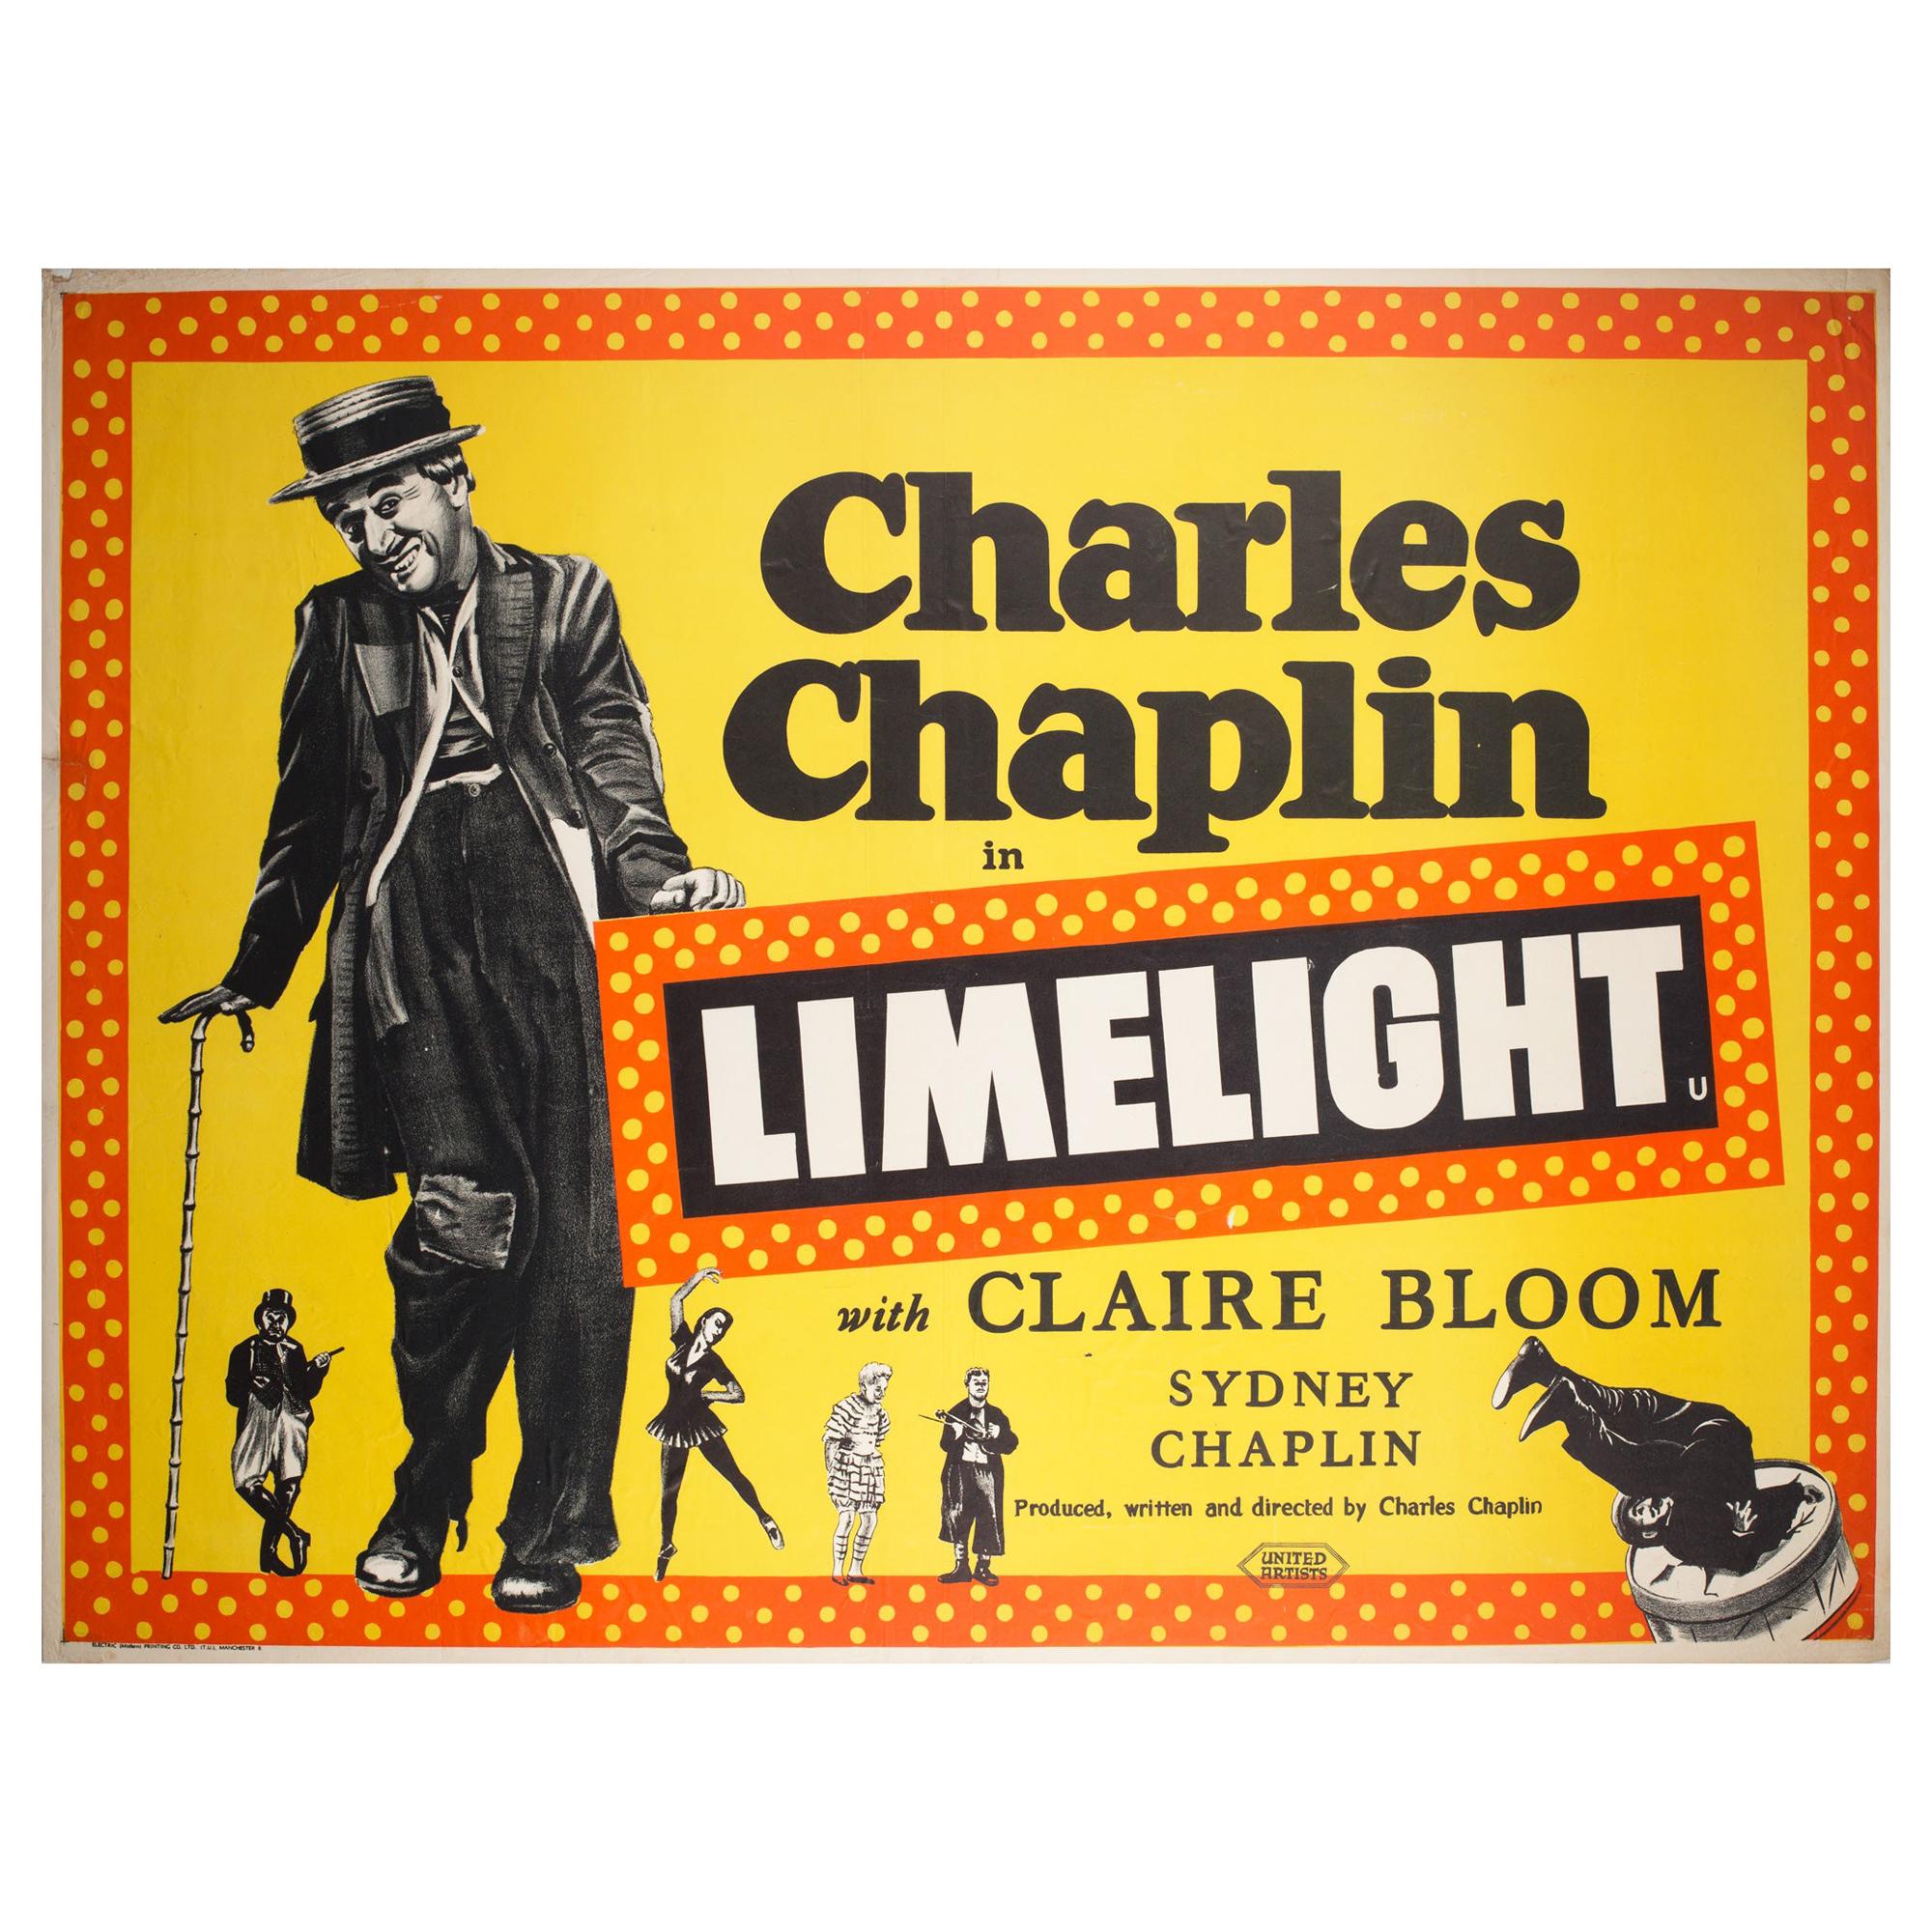 Limelight R1950s UK Quad Charles Chaplin Film Poster